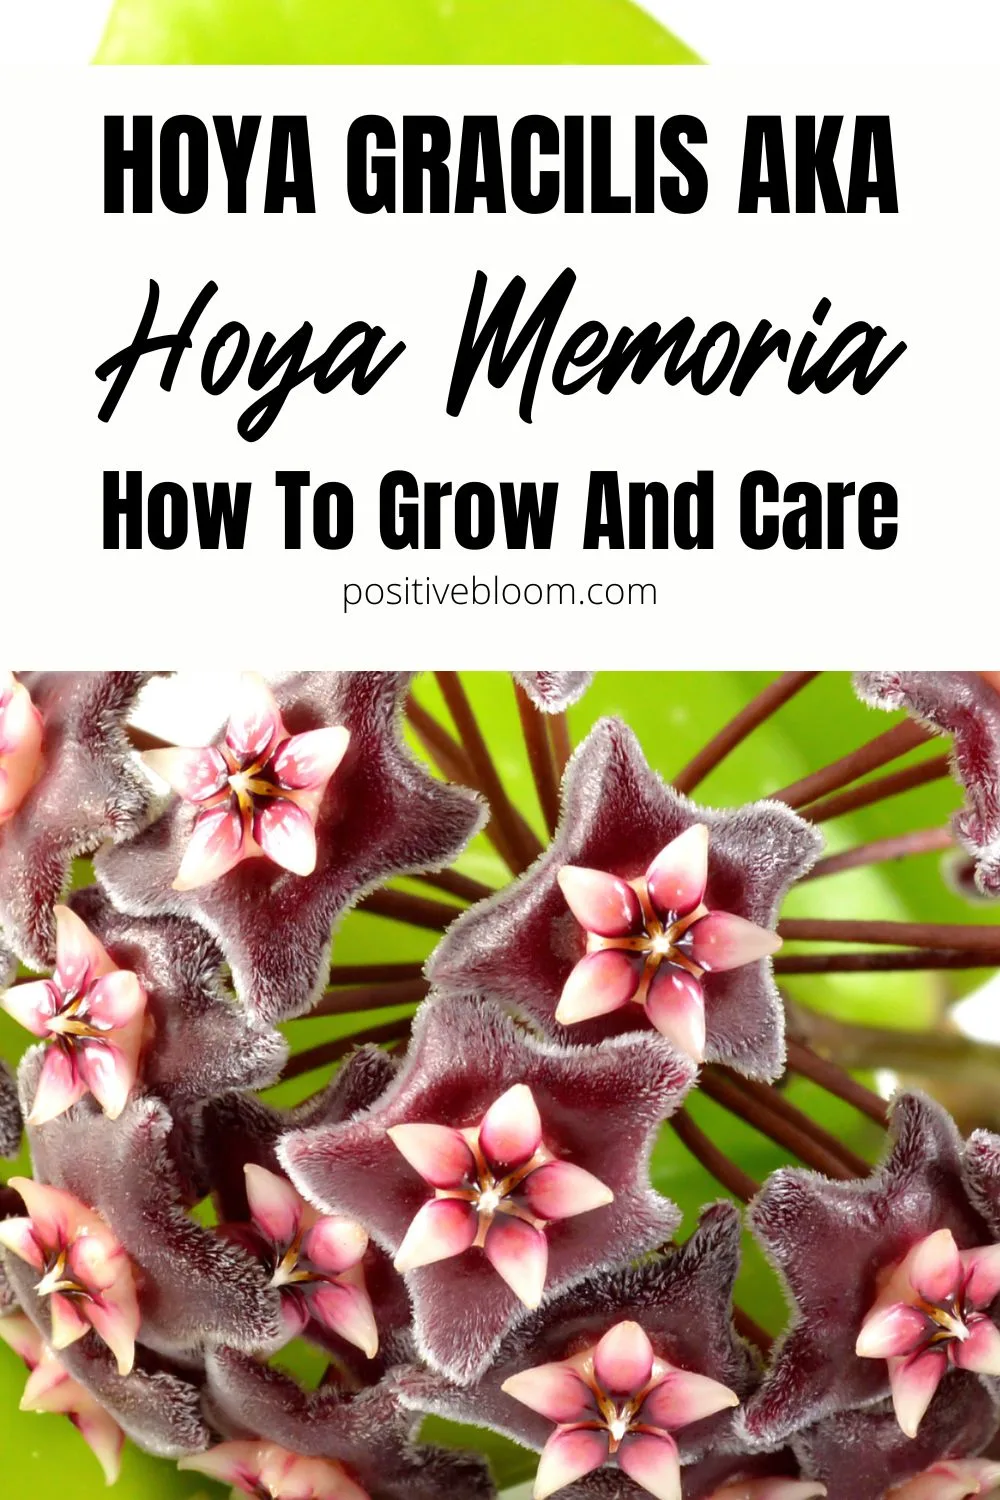 How To Grow And Care For Hoya Gracilis aka Hoya Memoria Pinterest